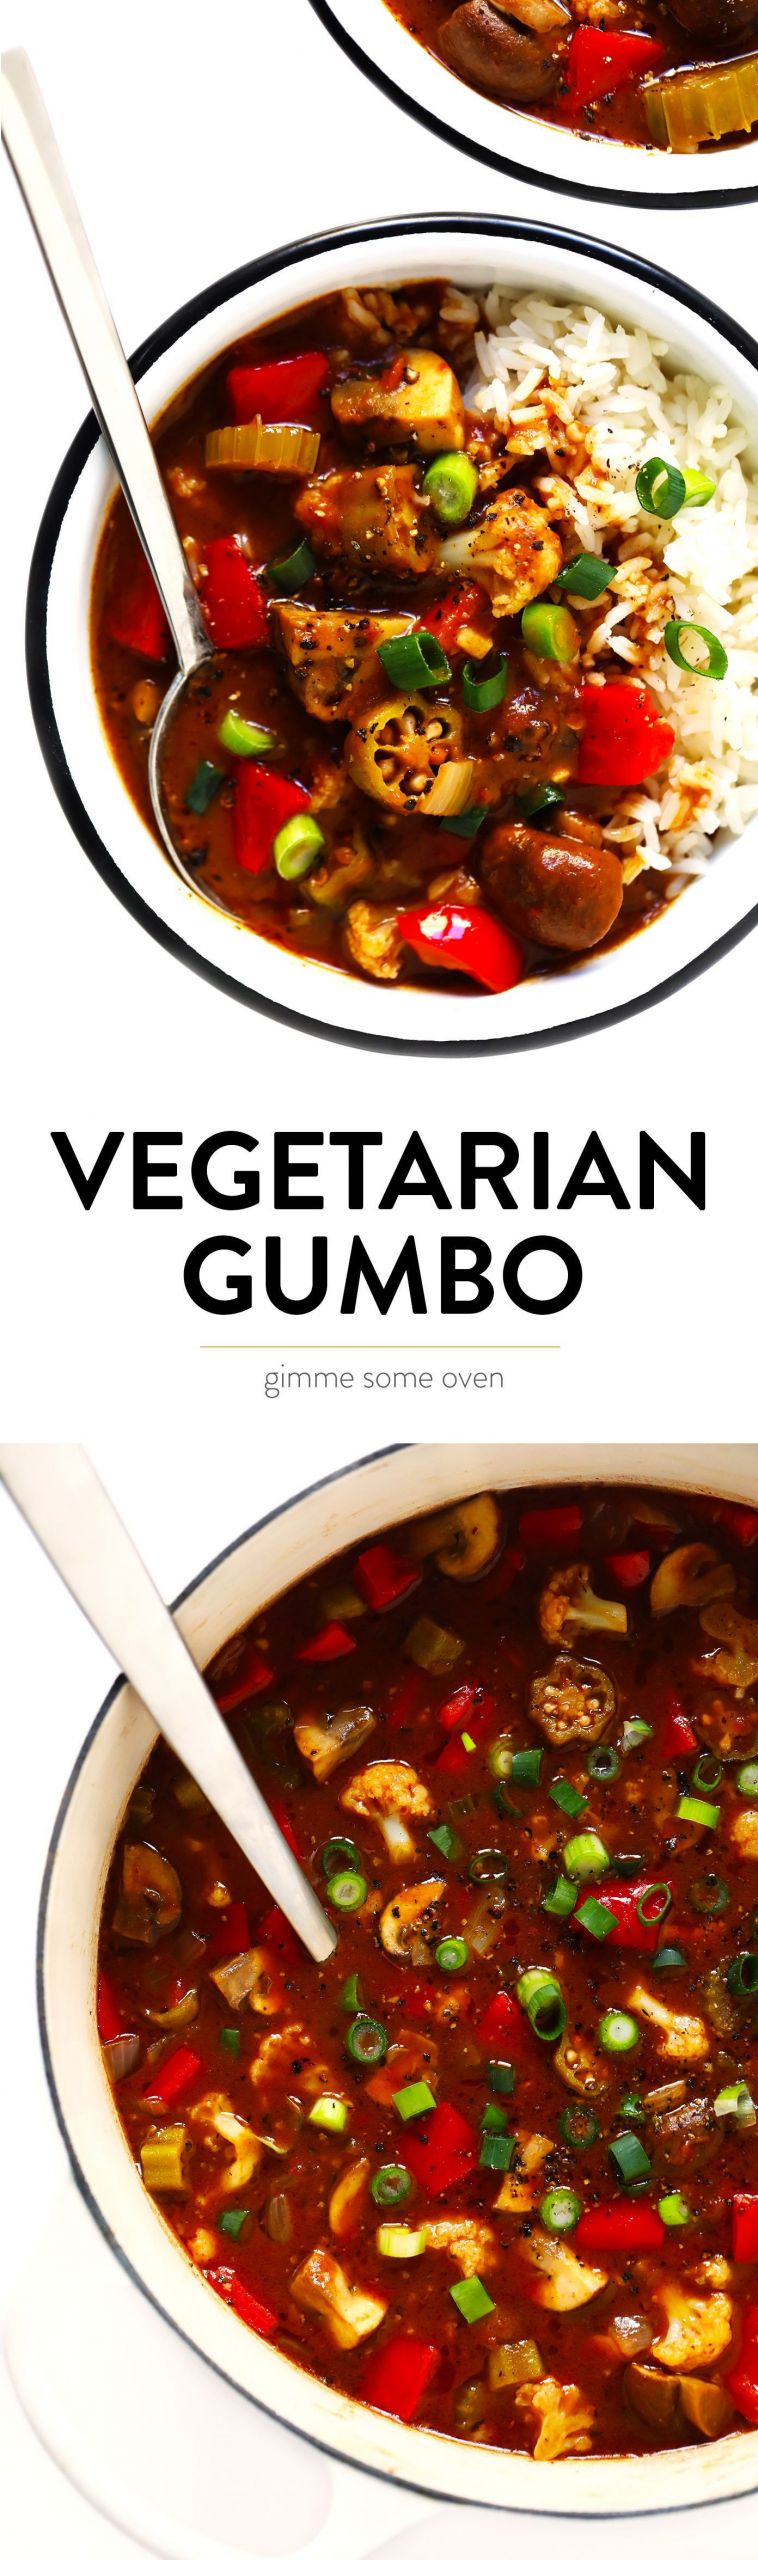 Vegetarian Gumbo Recipes
 Ve arian Gumbo Recipe